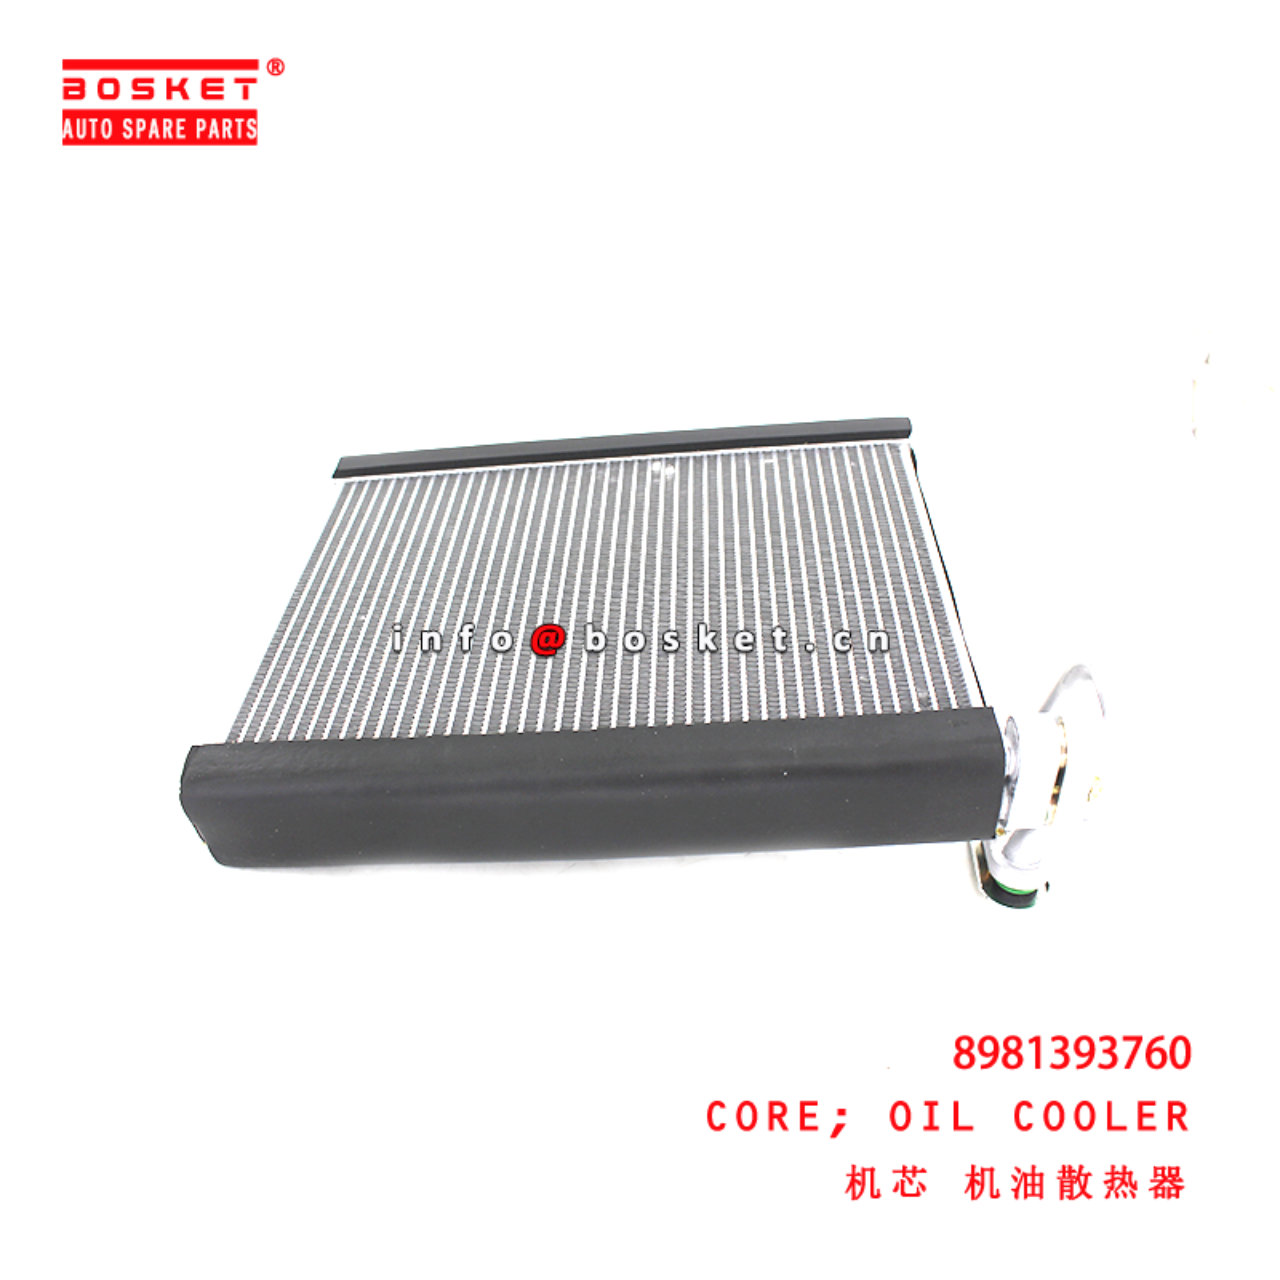 8-98139376-0 Oil Cooler Core suitable for ISUZU D-MAX  8981393760